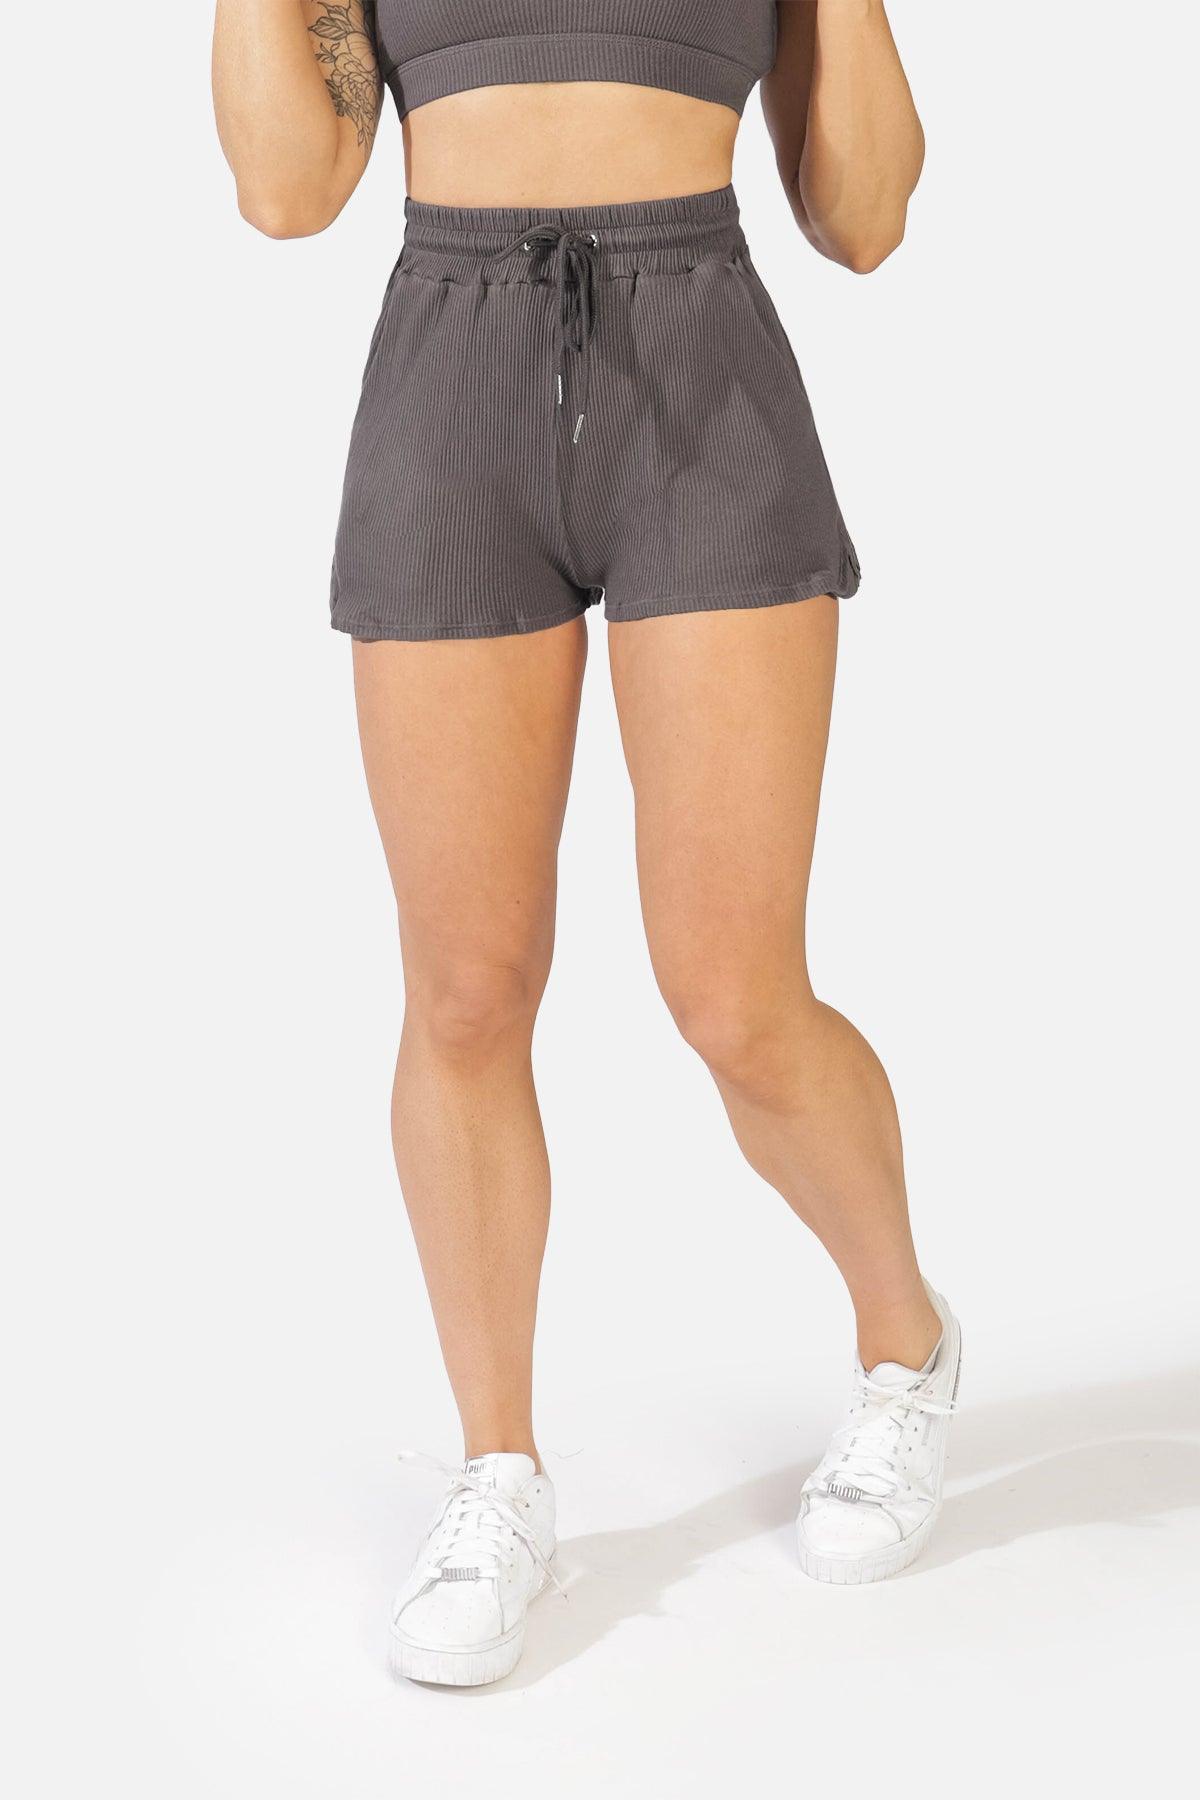 Coco Ribbed Flowy Shorts - Dark Gray - Jed North Canada